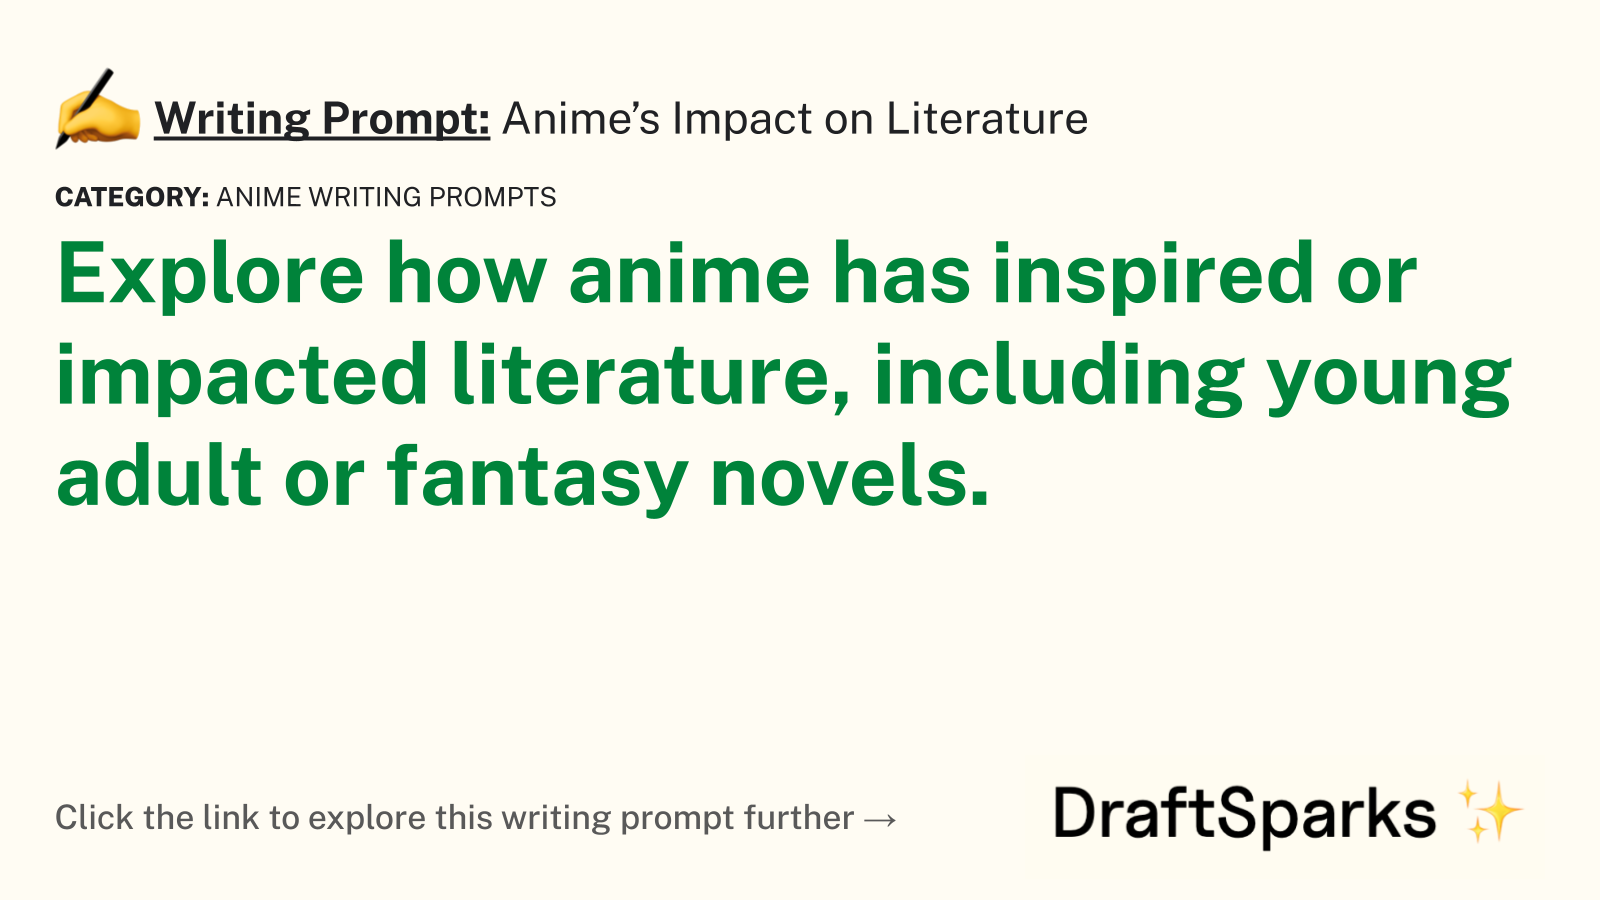 Anime’s Impact on Literature